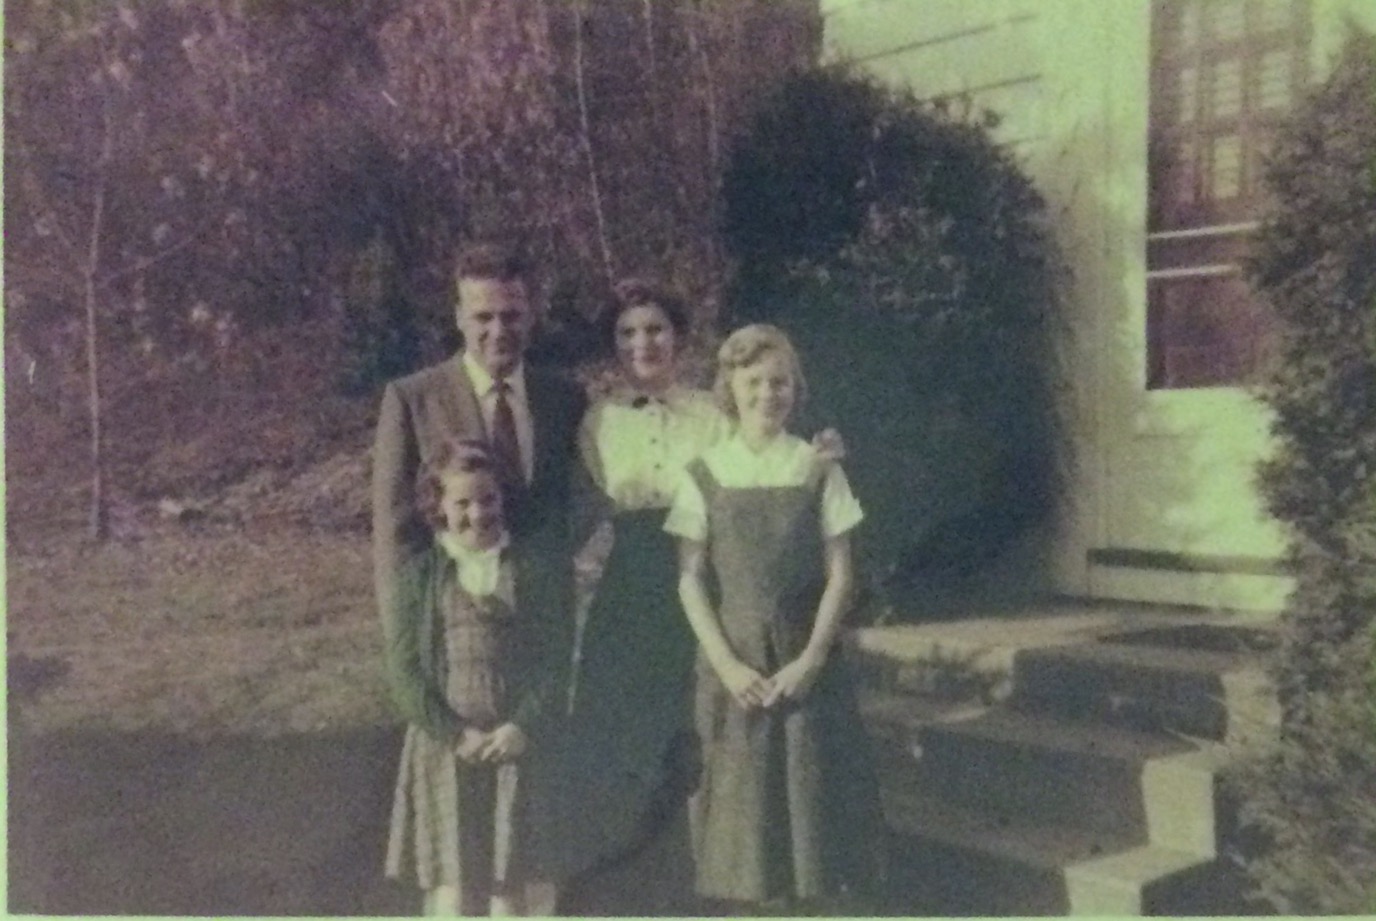 Glenn, Arline, Pat and Karen circa late 1950s, outside Felix and Eleanor Mira's house (in Pennsylvania?)